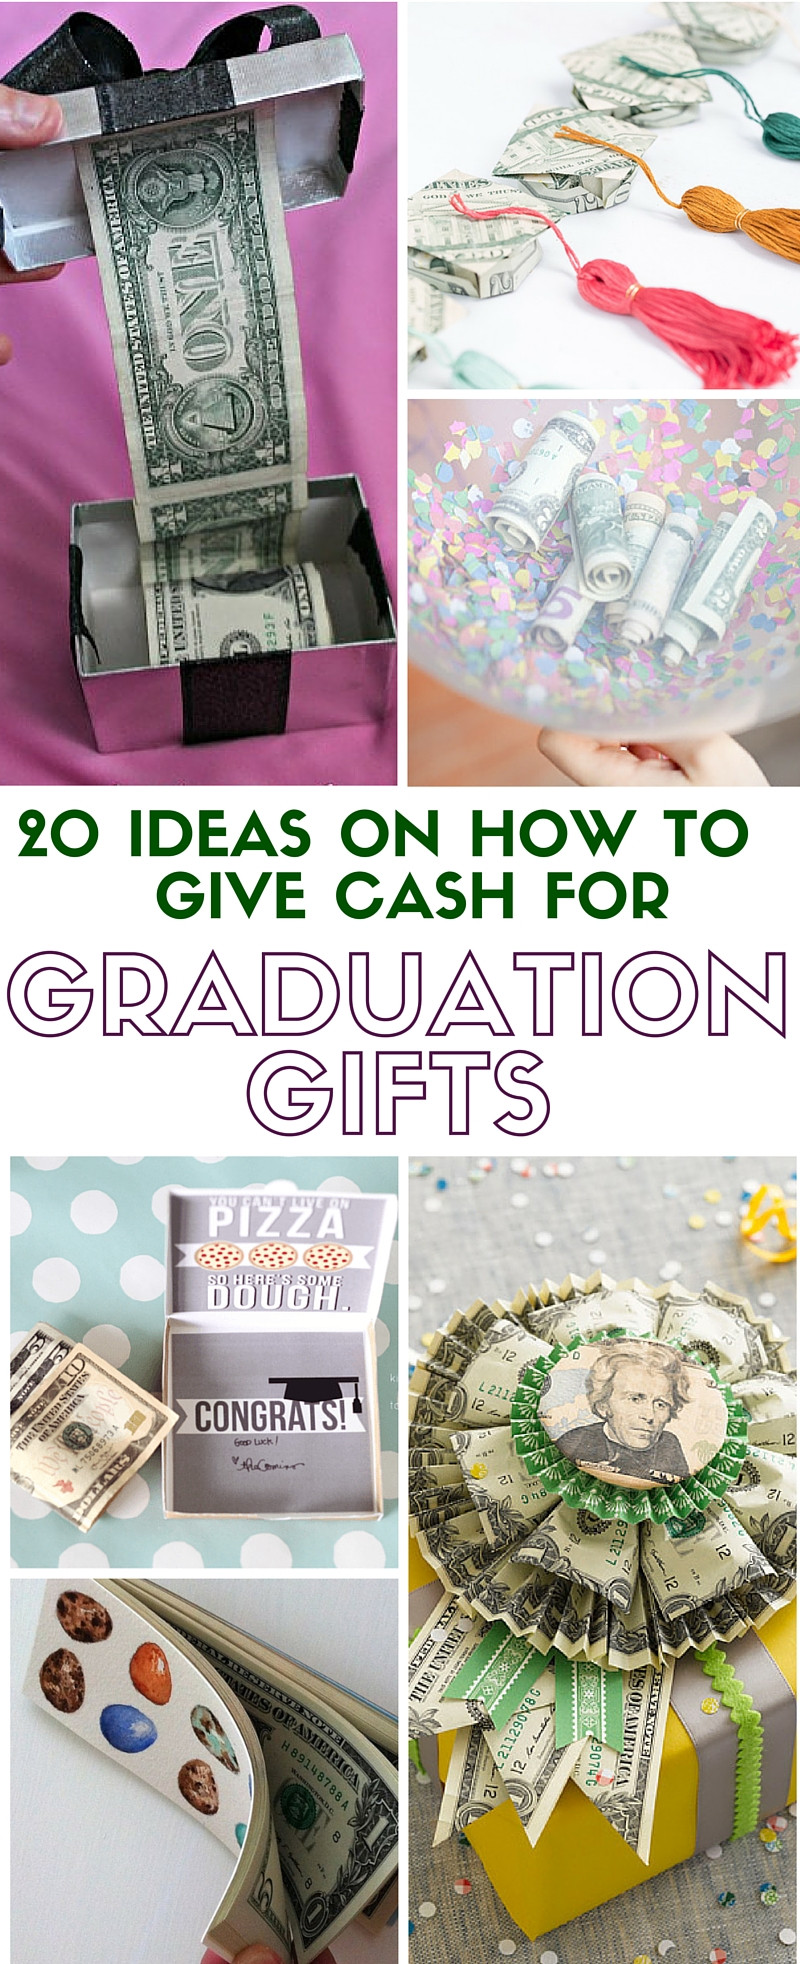 Sweet Graduation Gift Ideas
 31 Back To School Teacher Gift Ideas The Crafty Blog Stalker